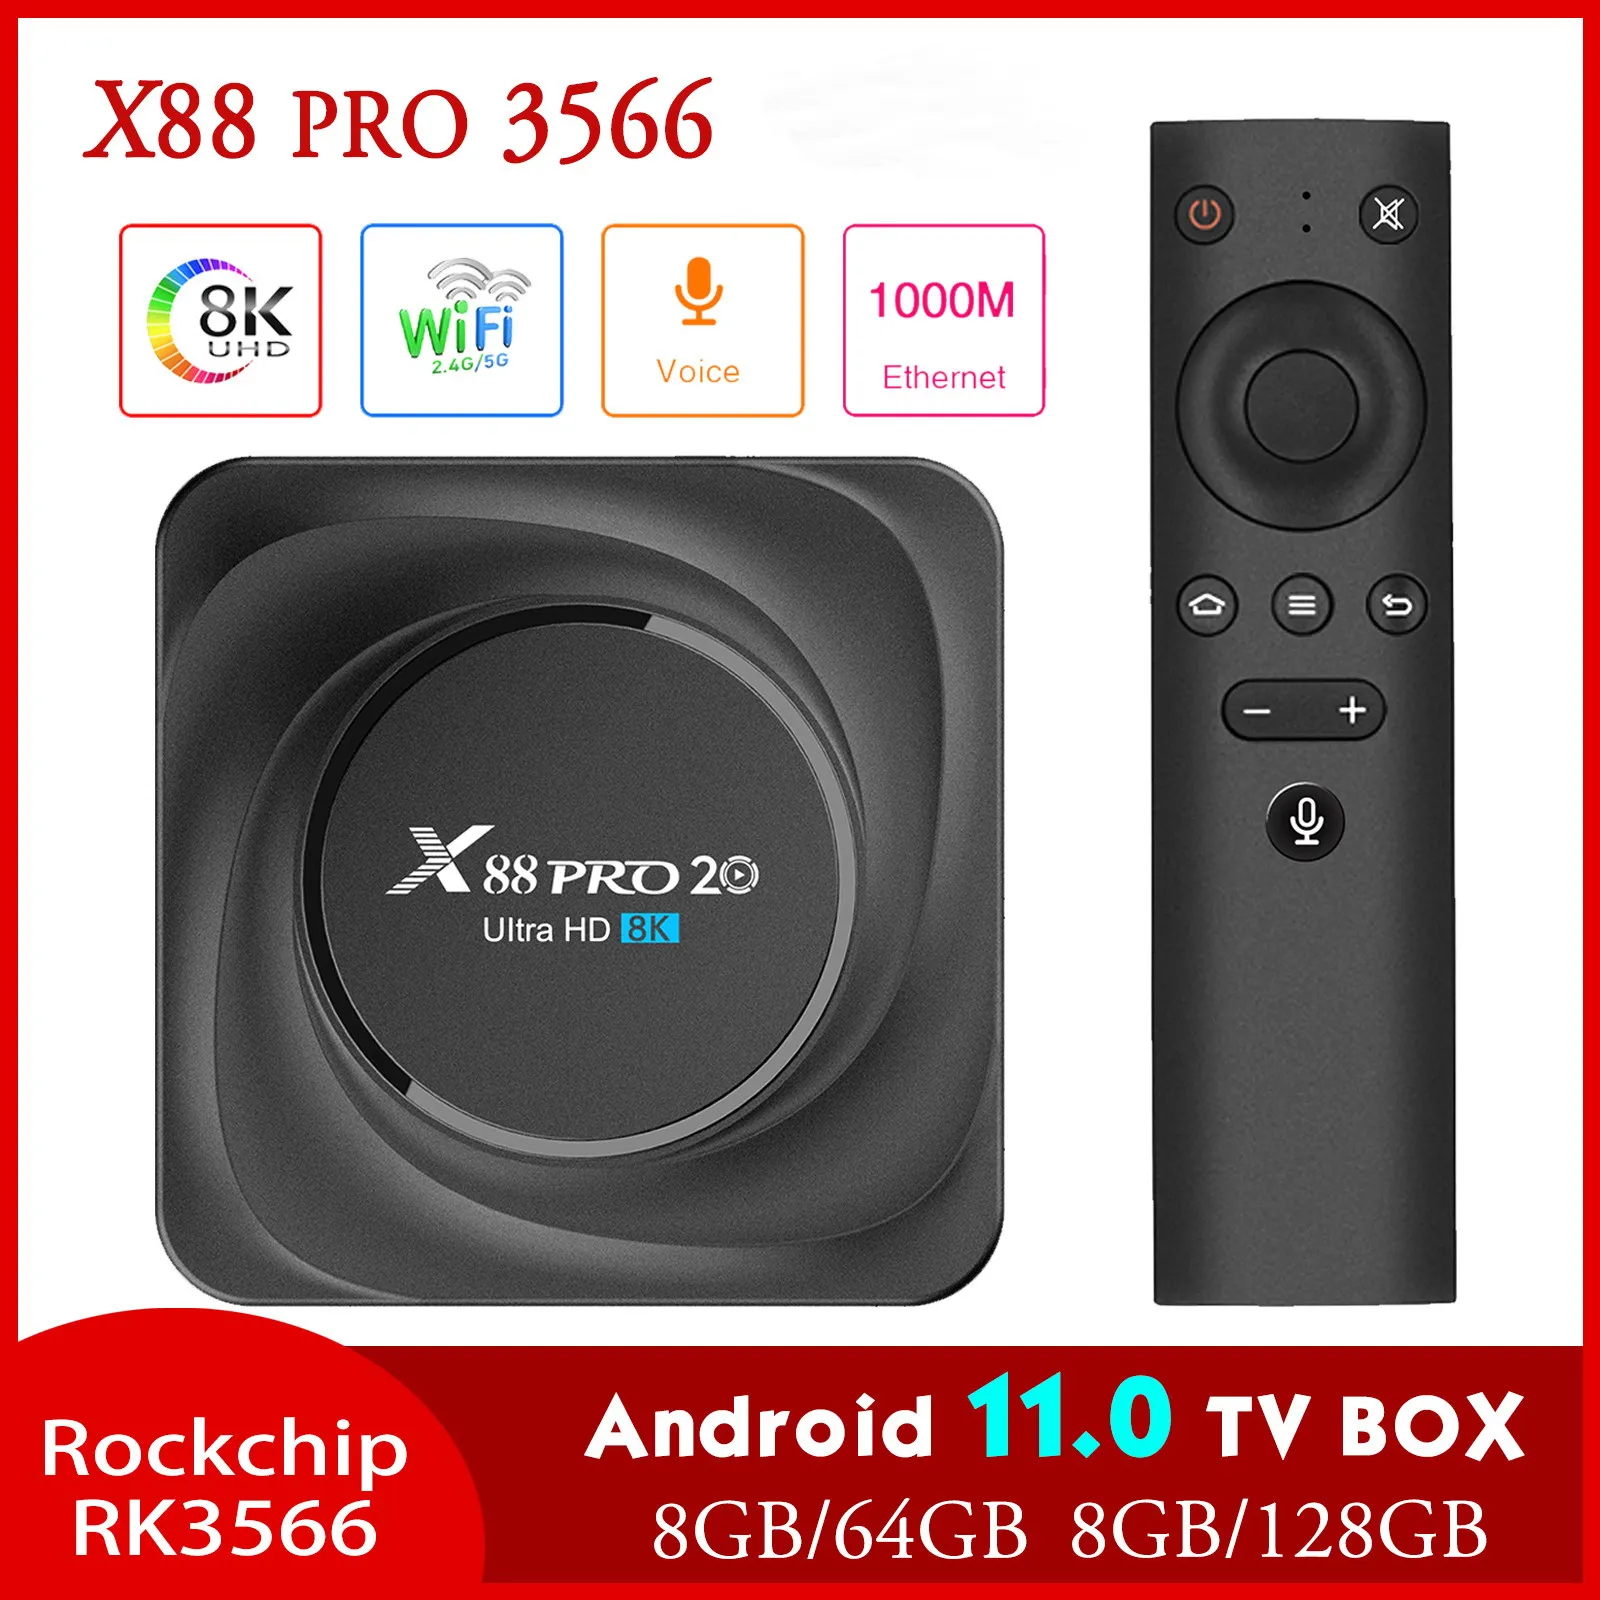 X88 PRO 20 Android 11 Rk3588 Tv Box With 8GB RAM, 128GB ROM, Rockchip  RK3566, 8K Media Player, Google 1000M, And 4GB/32GB Storage From Arthur032,  $36.68